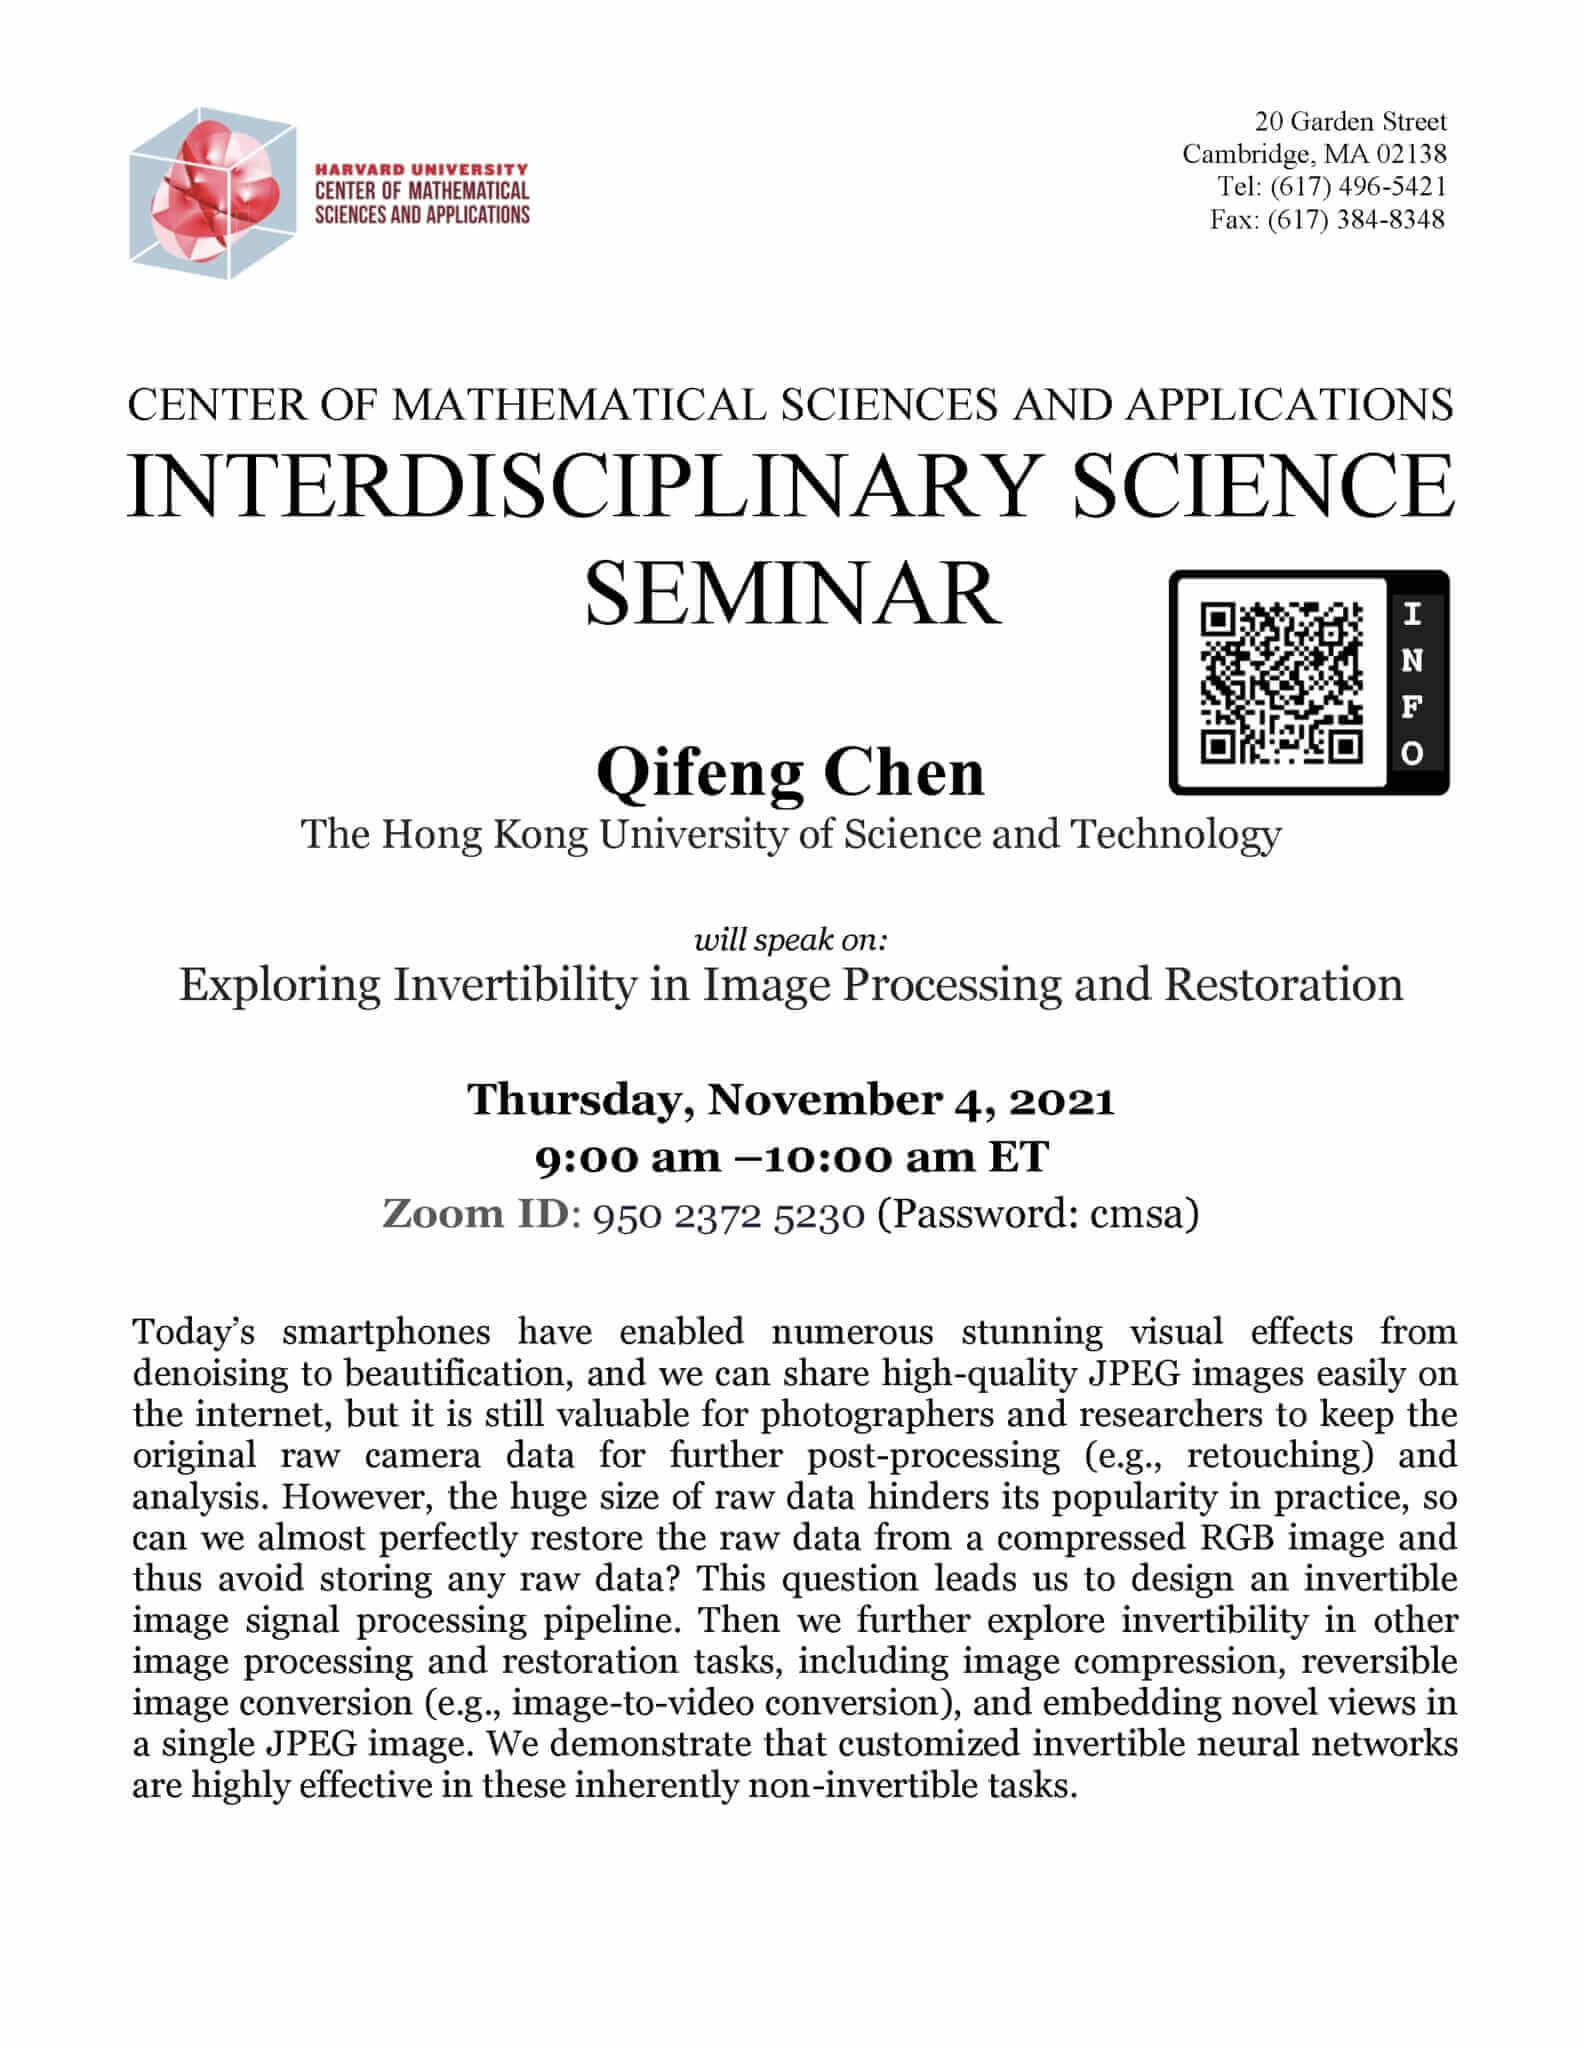 CMSA-Interdisciplinary-Science-Seminar-11.04.21-1583x2048-1